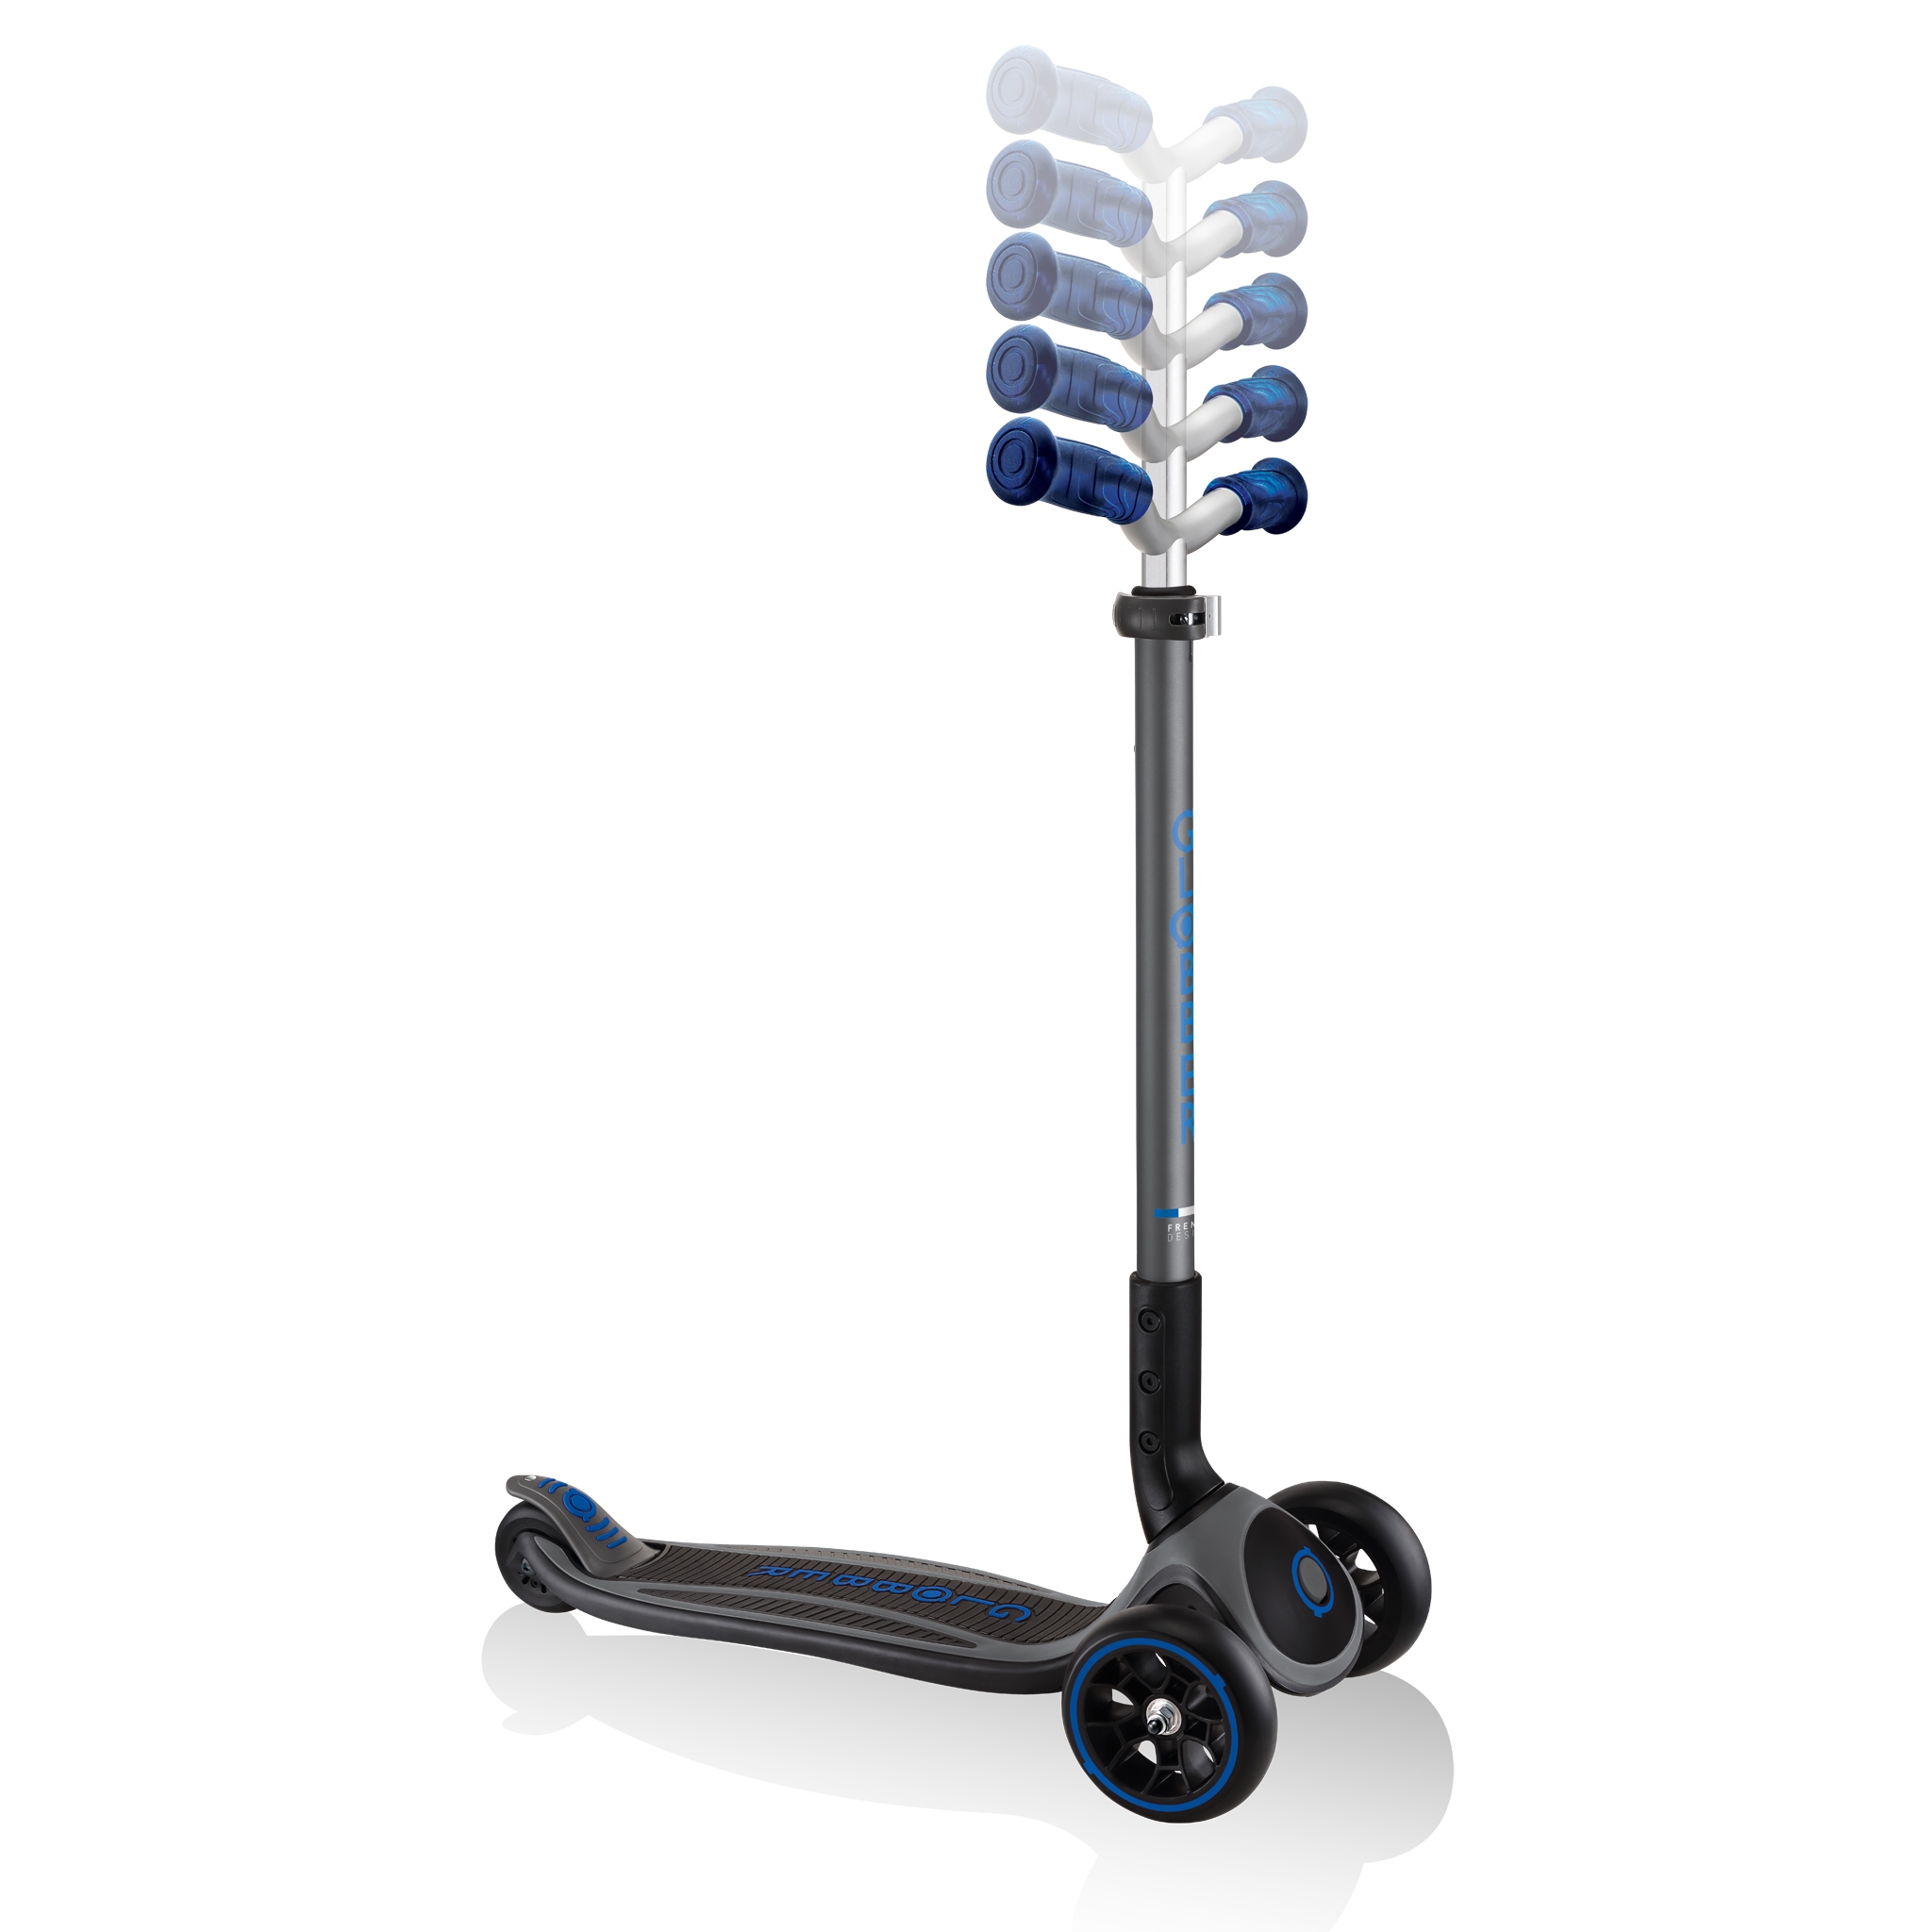 MASTER-PRIME-adjustable-large-3-wheel-kick-scooter 1